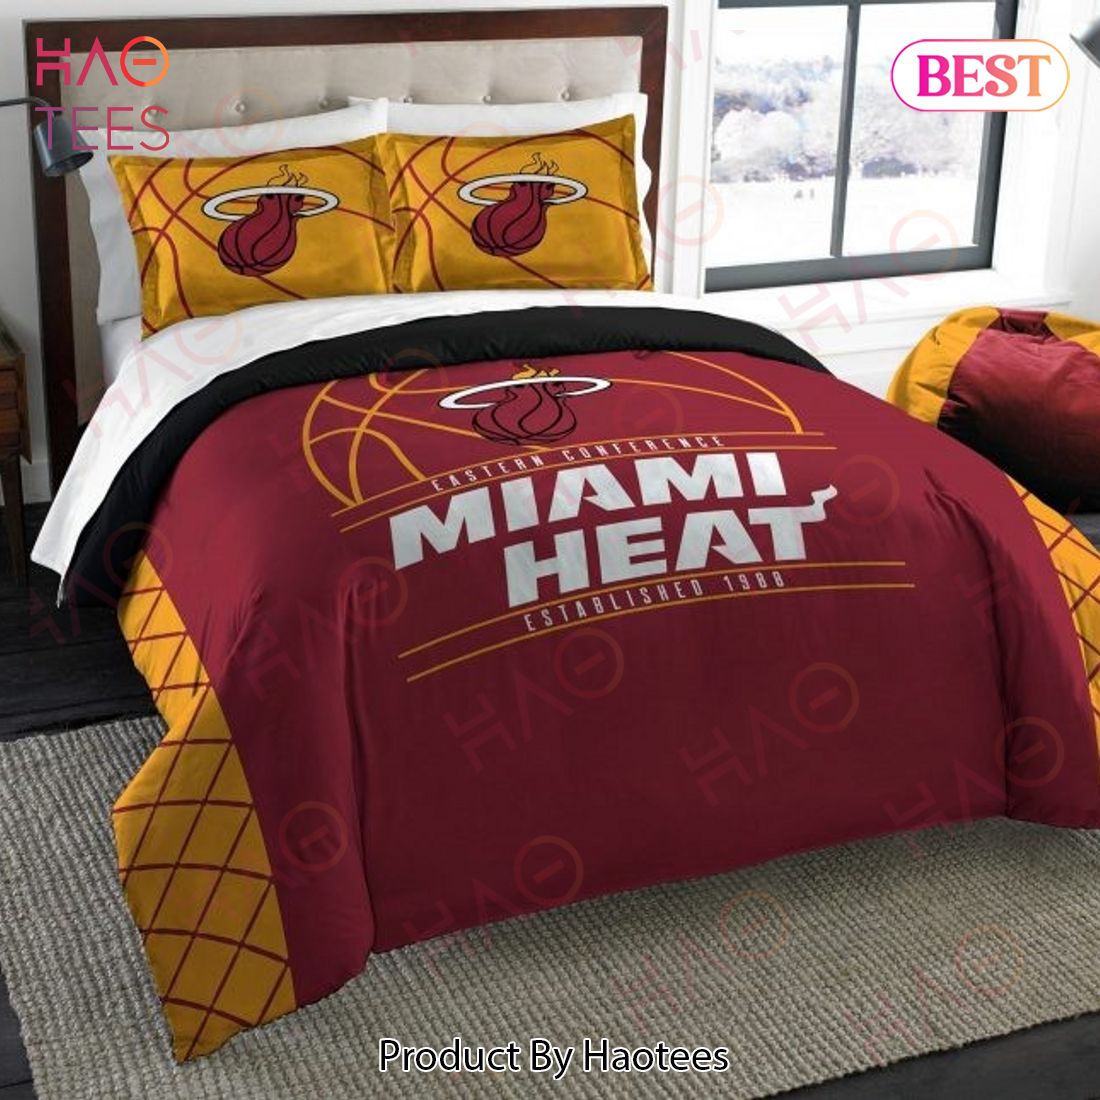 NEW NBA Miami Heat Bedding Duvet Cover Limited Edition Limted Editon